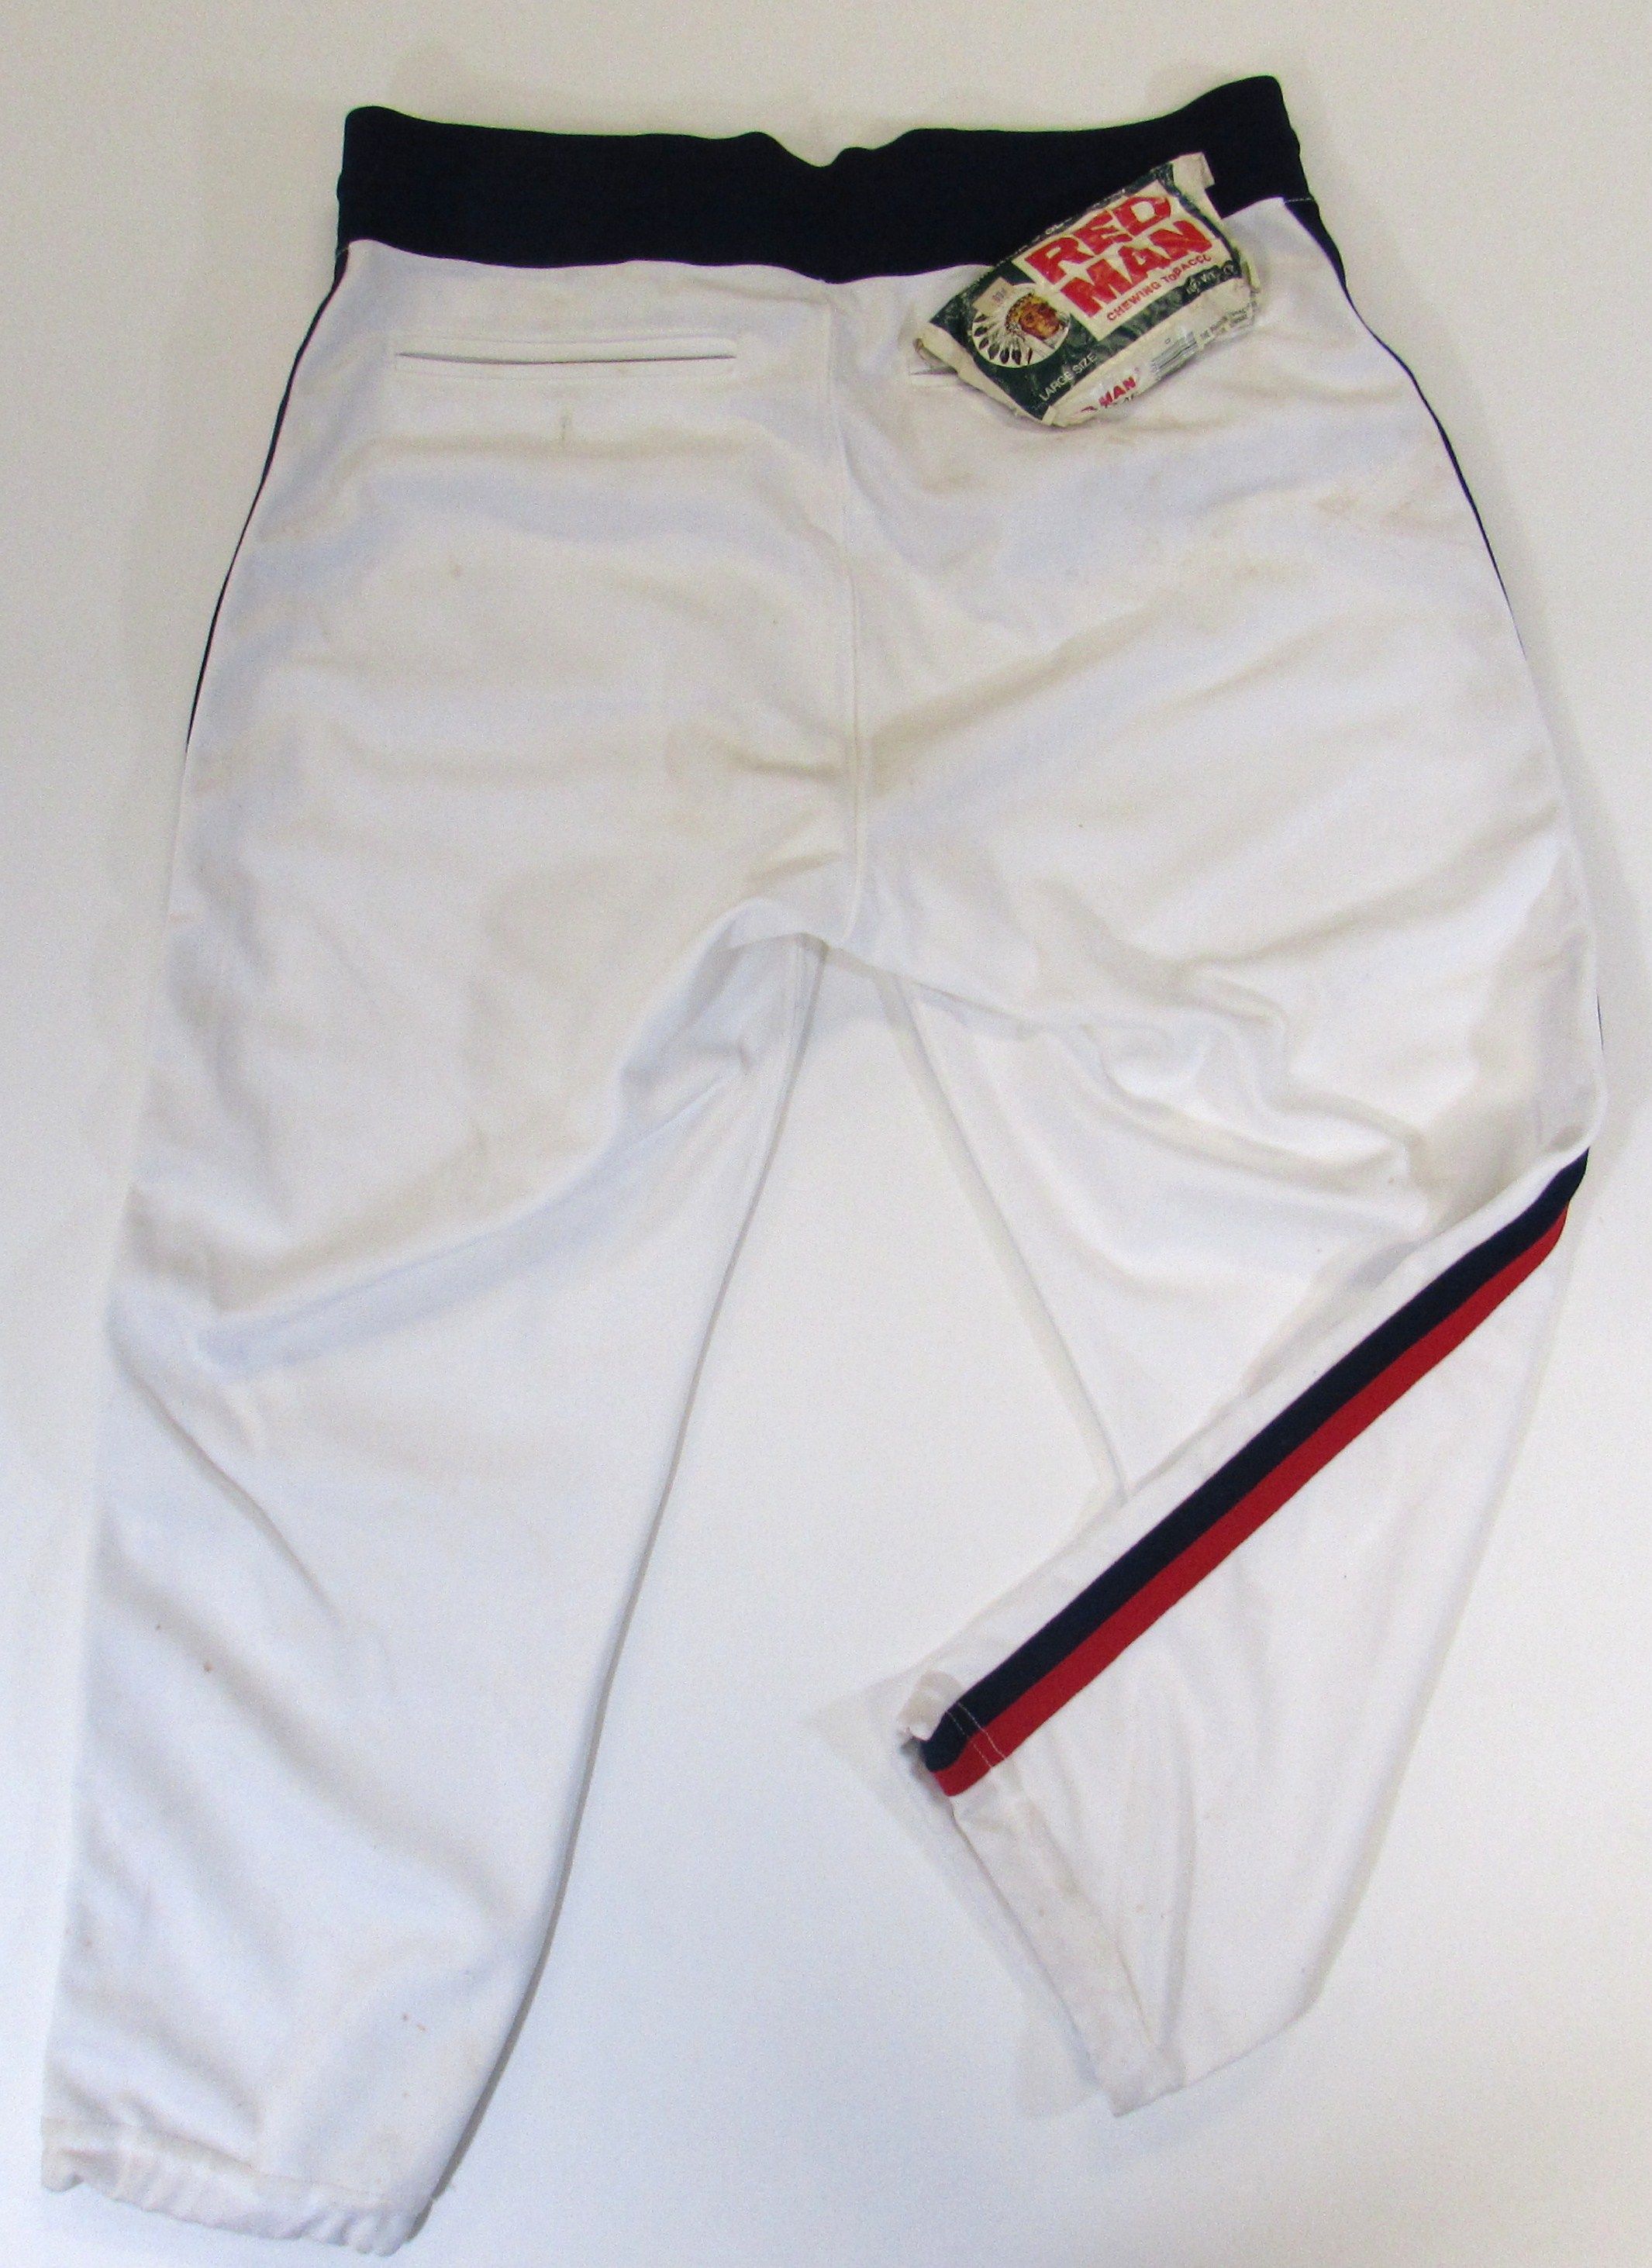 greg luzinski white sox shorts uniform